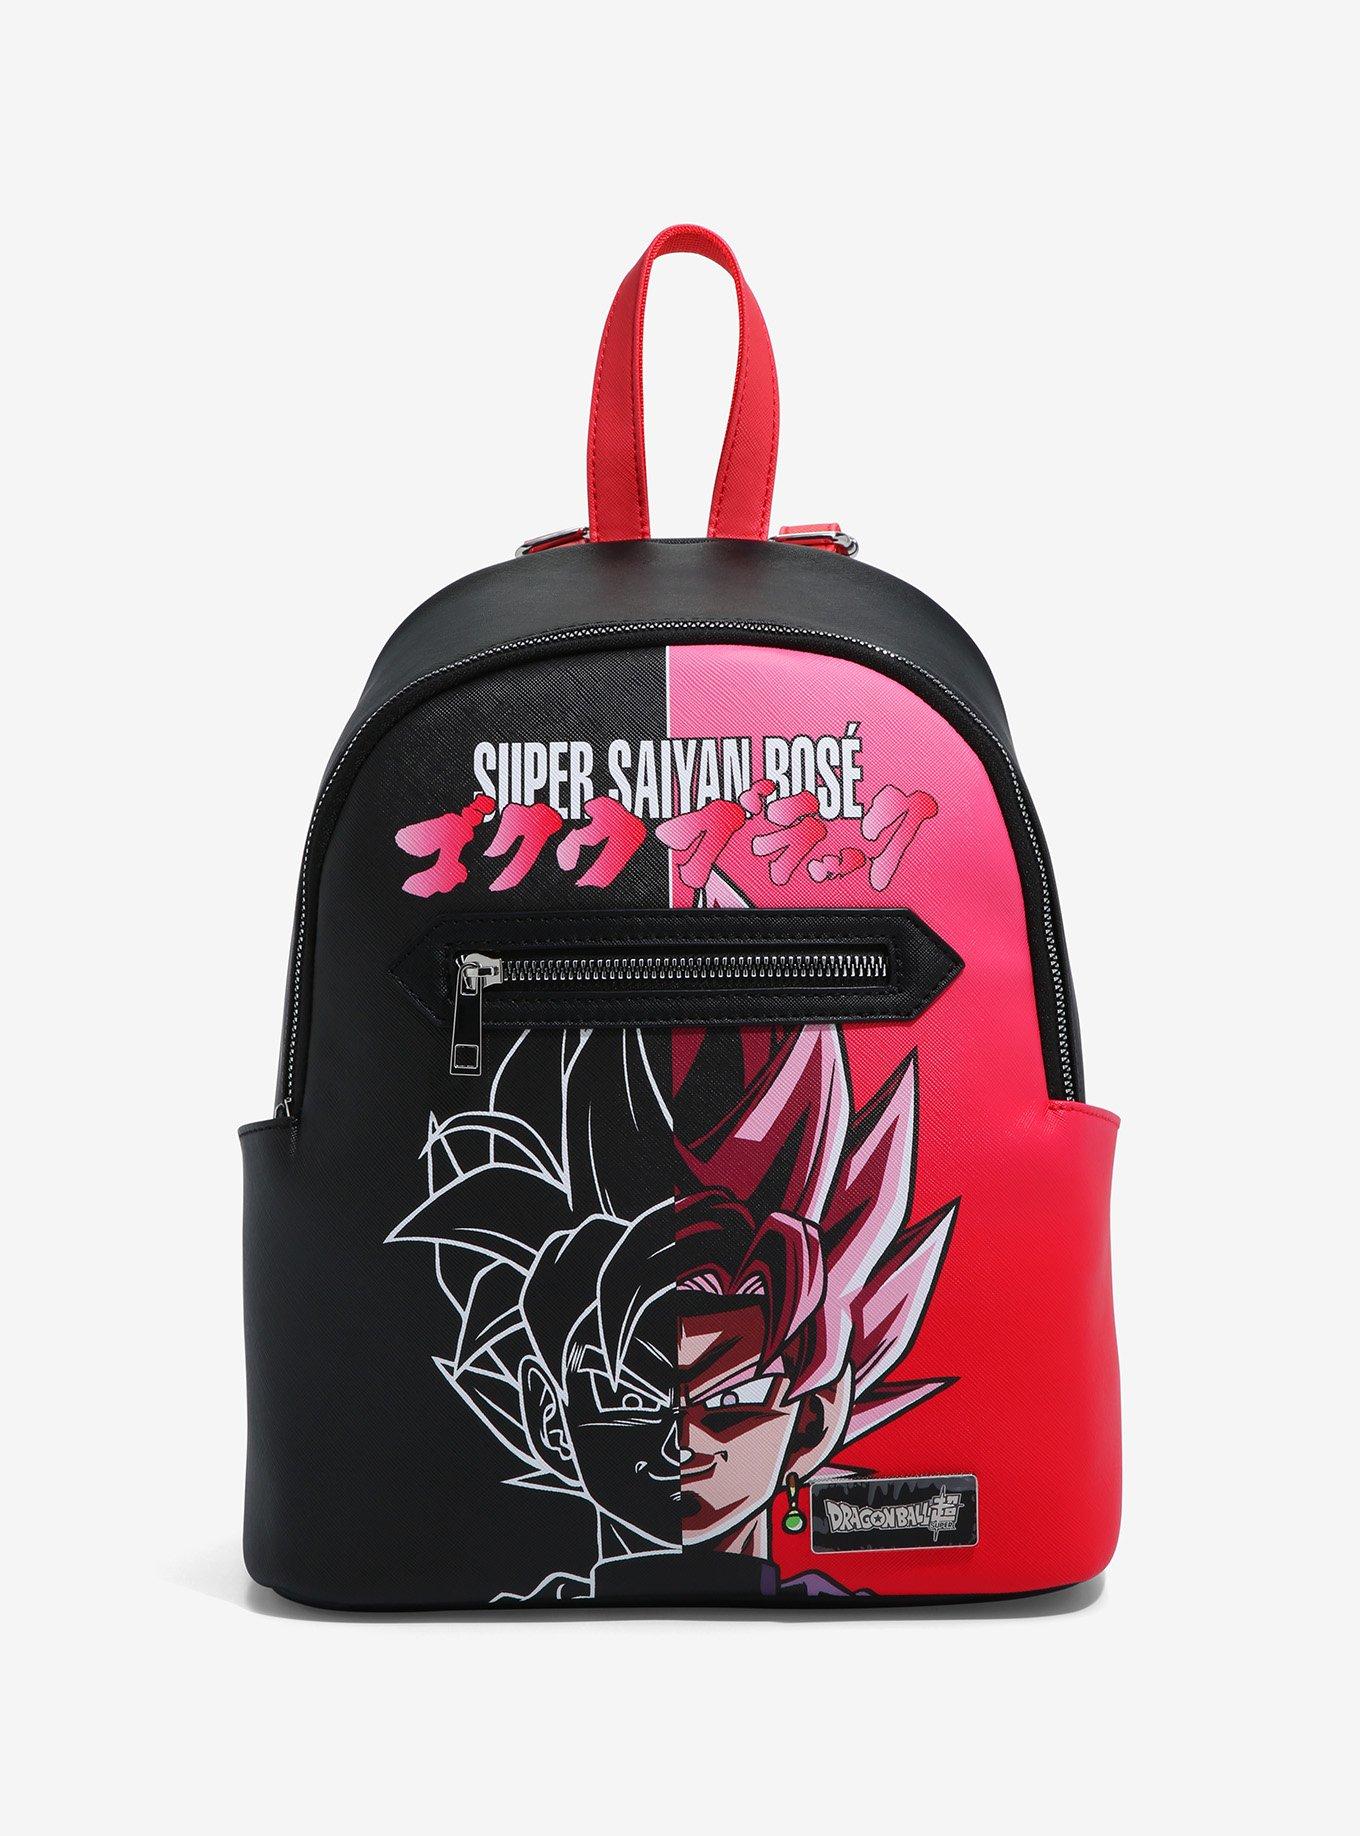 Dragon Ball Z Backpack - Kame (Turtle)